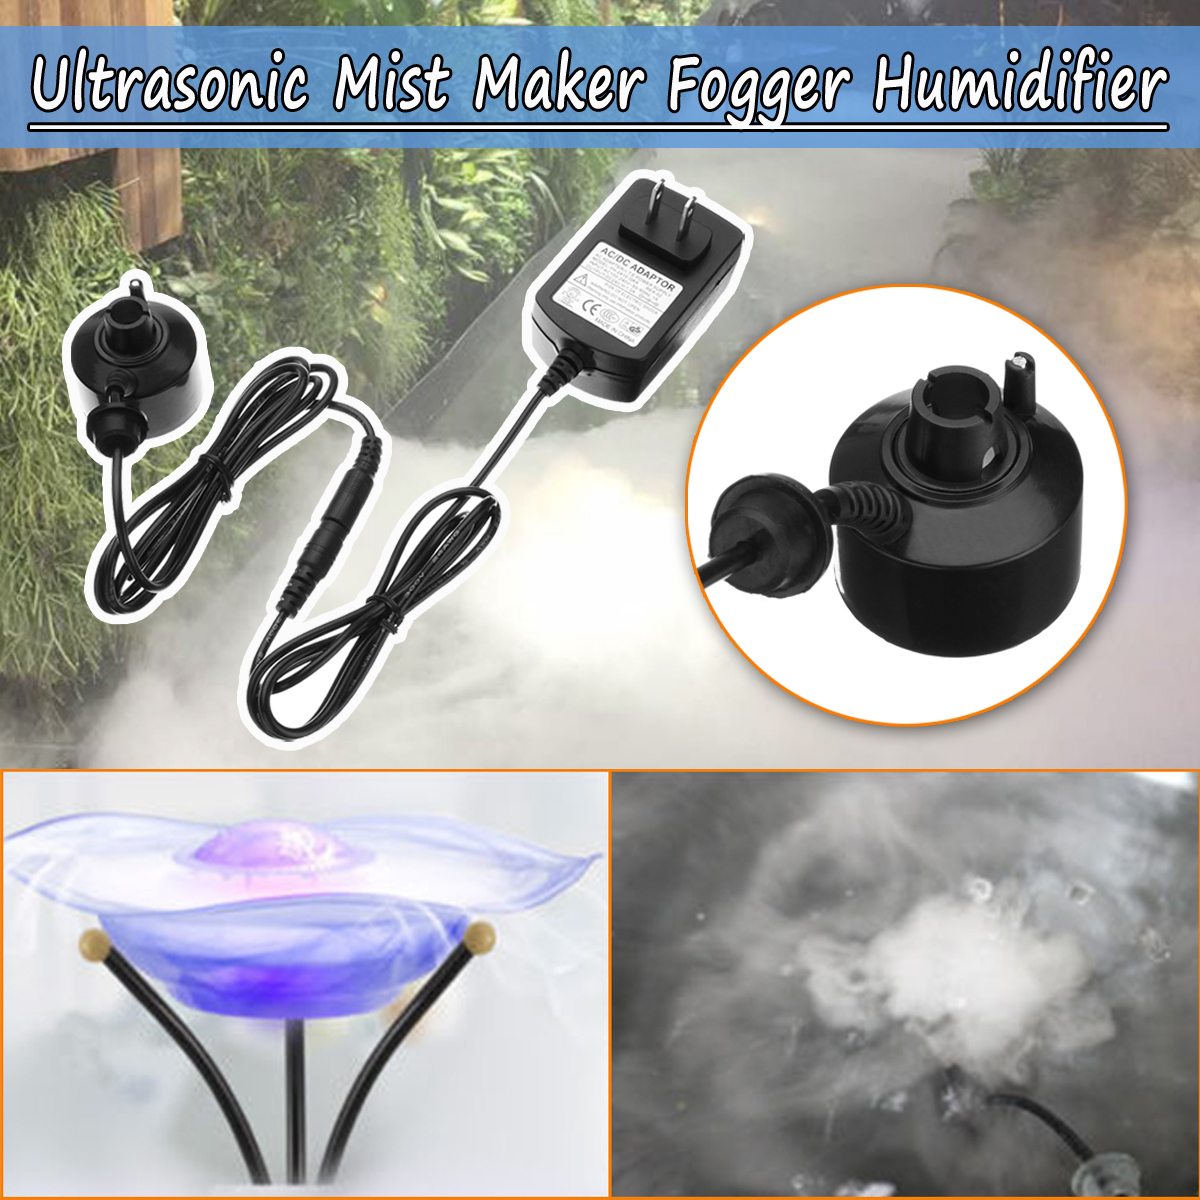 24V-Ultrasonic-Mist-Maker-Fogger-Humidifier-Fogger-Water-Fountain-Atomizer-1457254-2